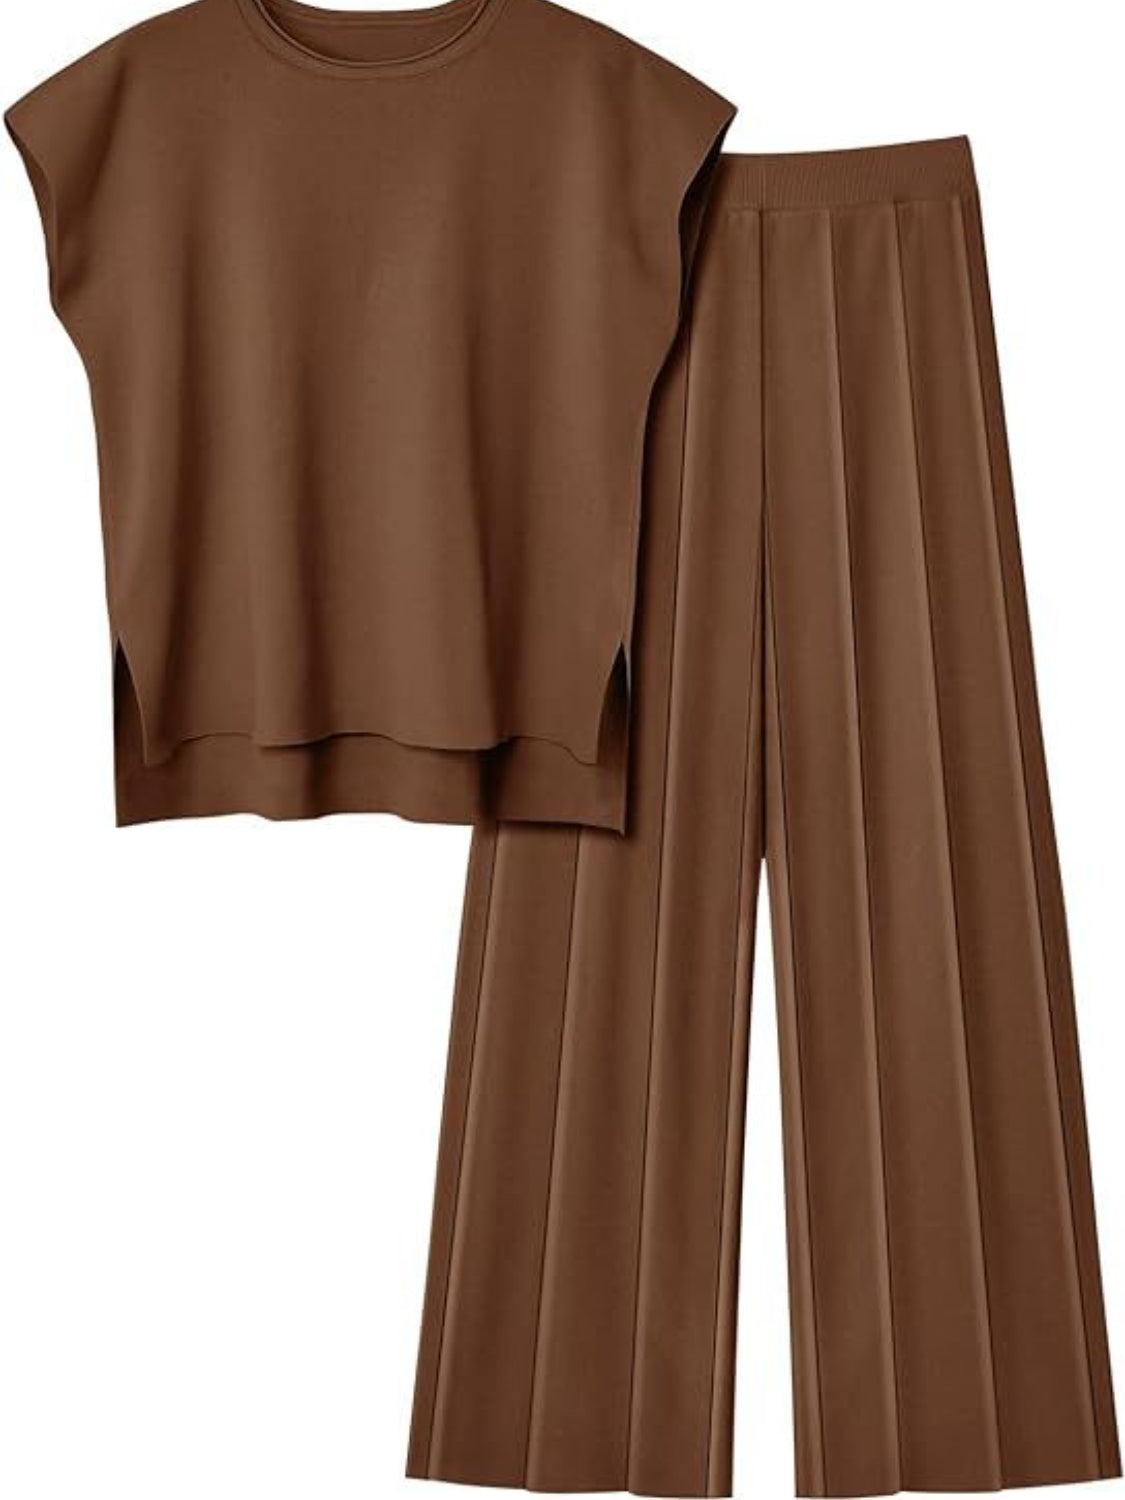 Round Neck Cap Sleeve Top and Pants Knit Set - Fashion BTQ -  - Fashion BTQ